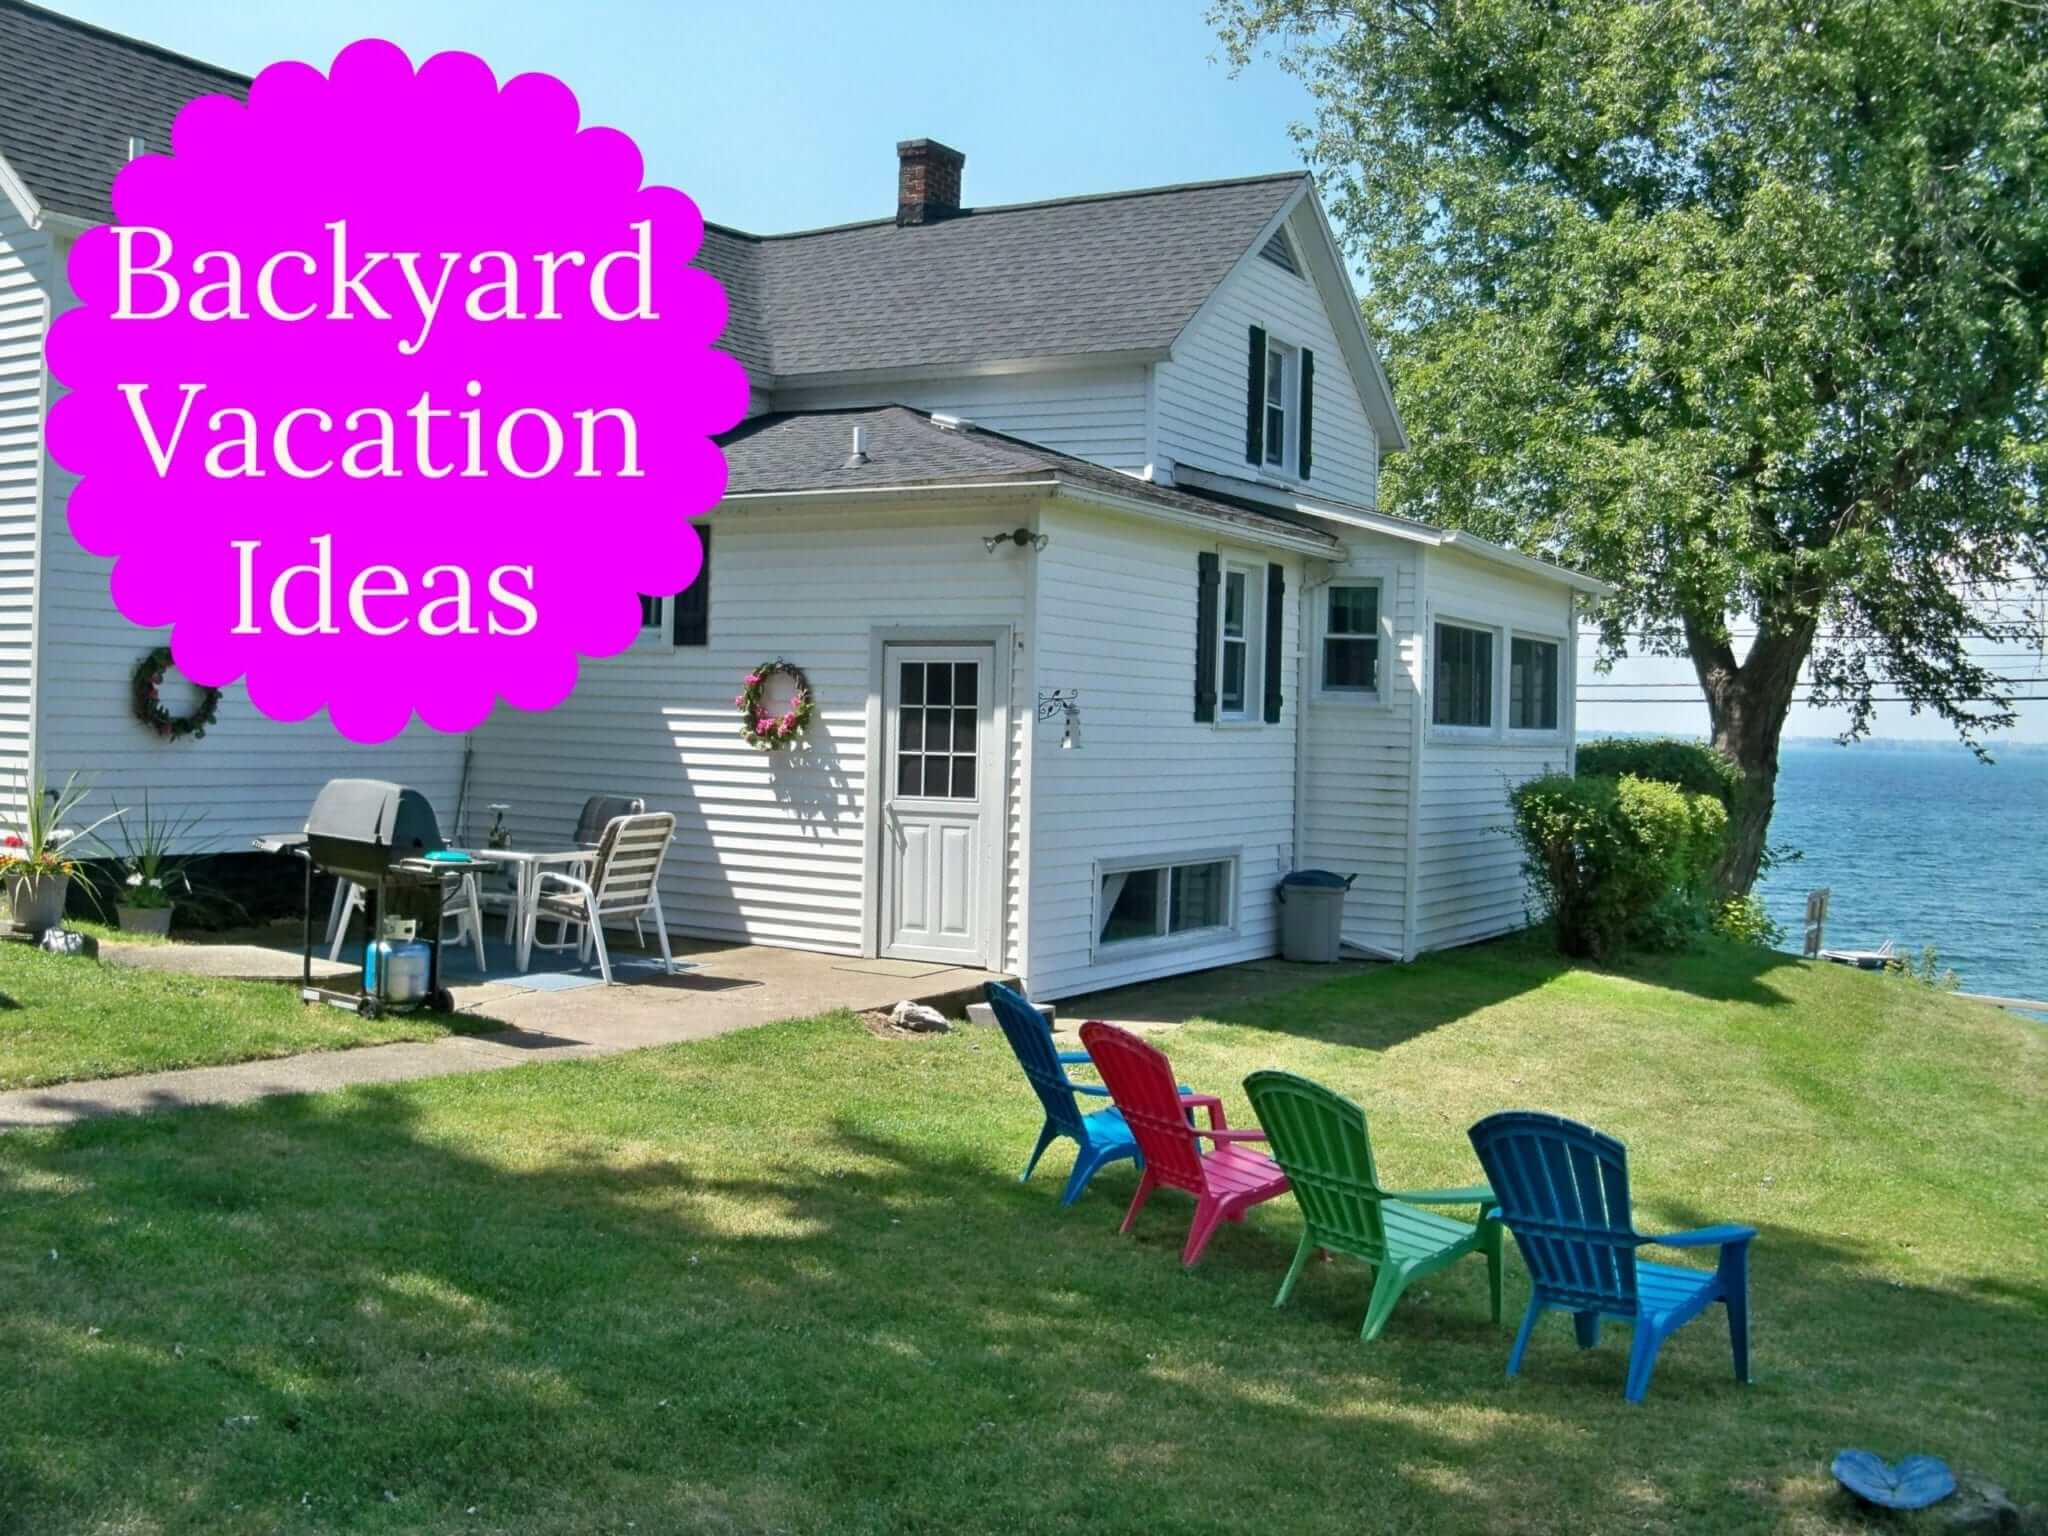 Backyard Vacation Ideas